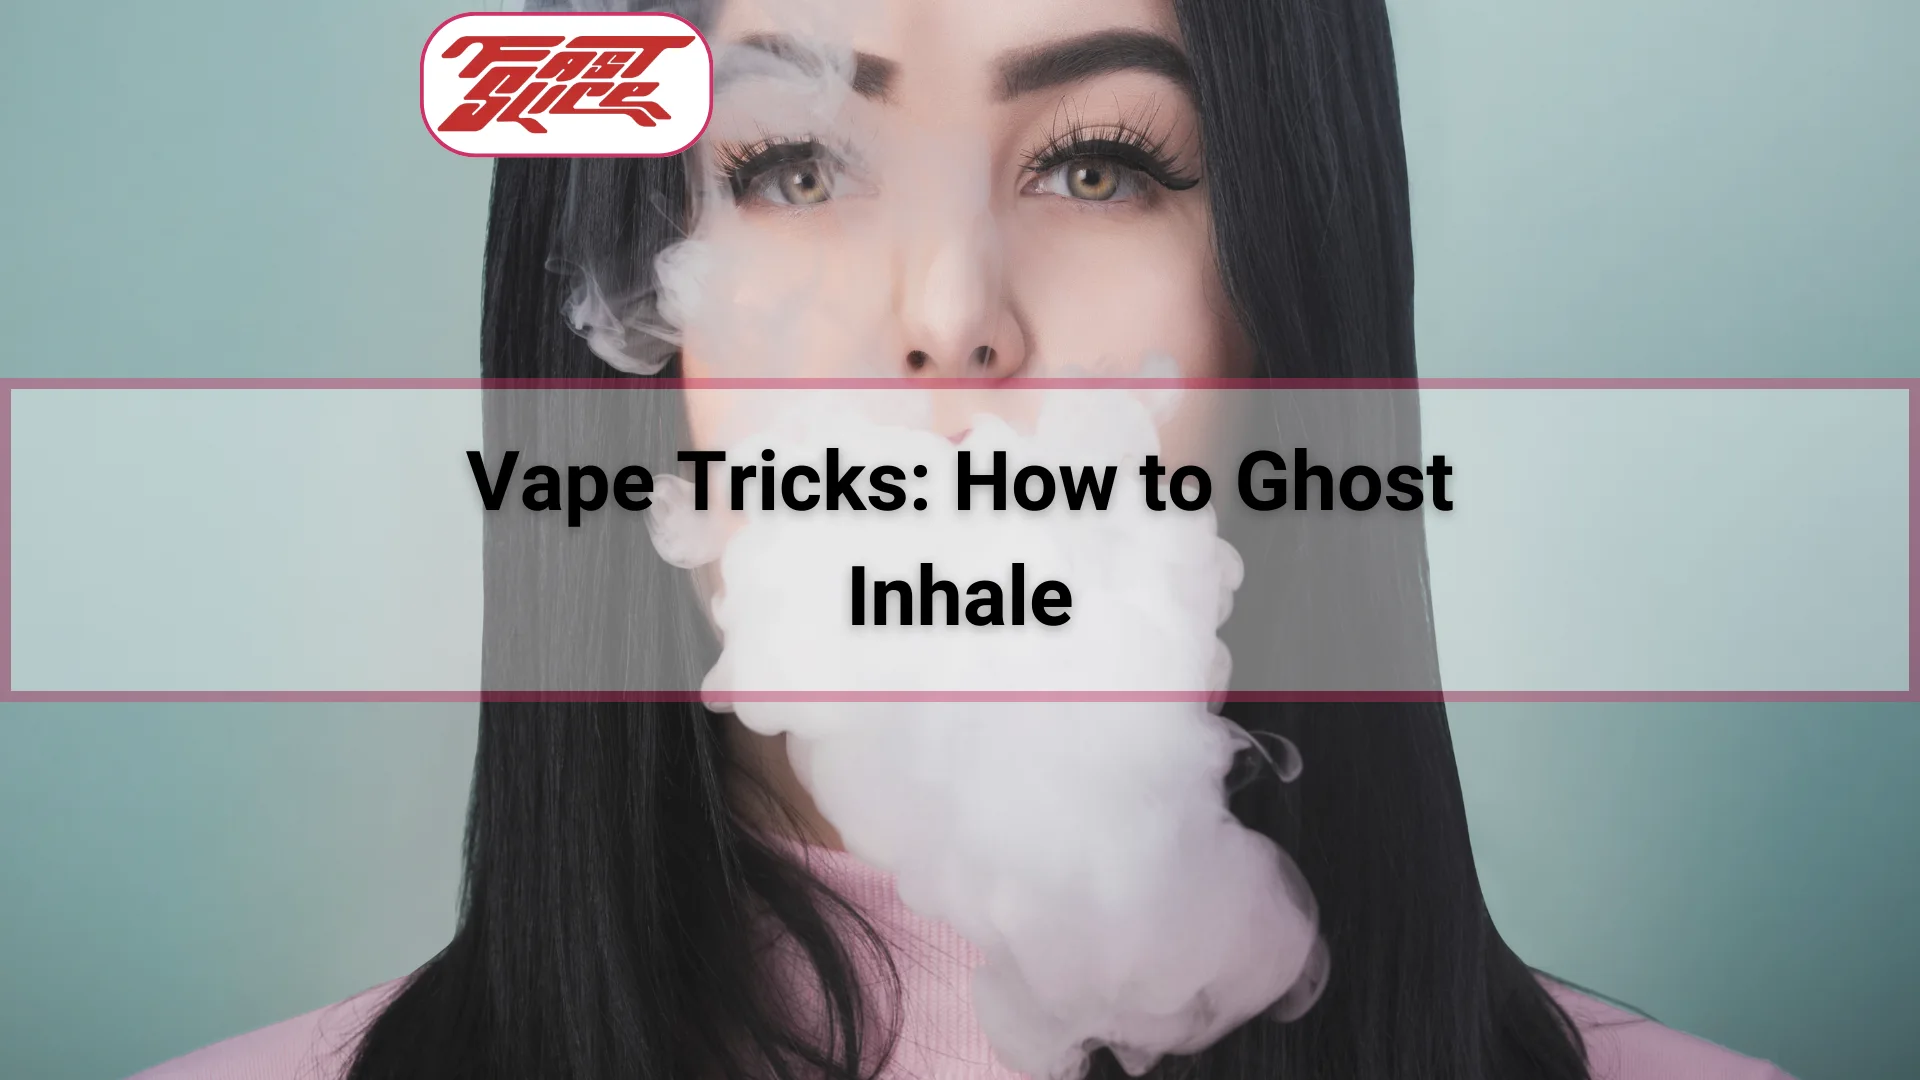 vape tricks how to ghost inhale, girl performing a ghost inhale vape trick